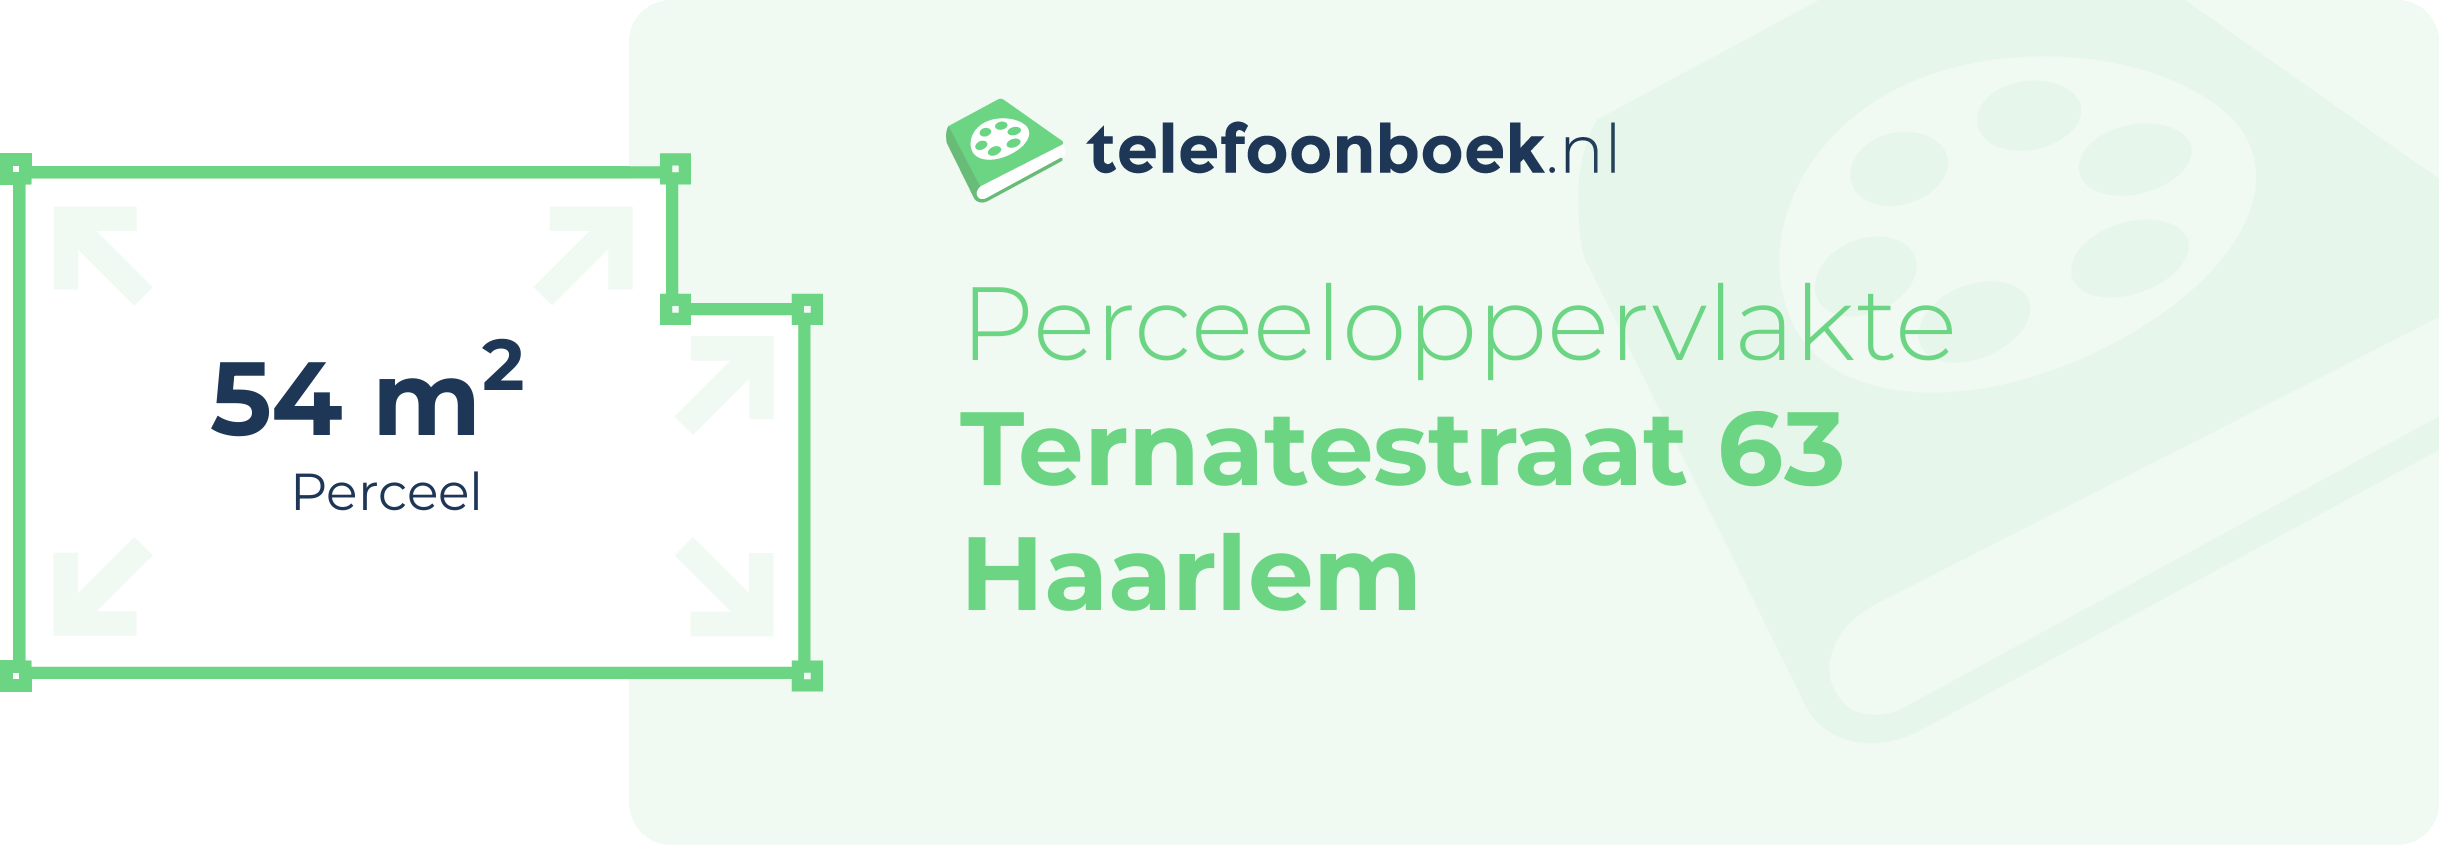 Perceeloppervlakte Ternatestraat 63 Haarlem